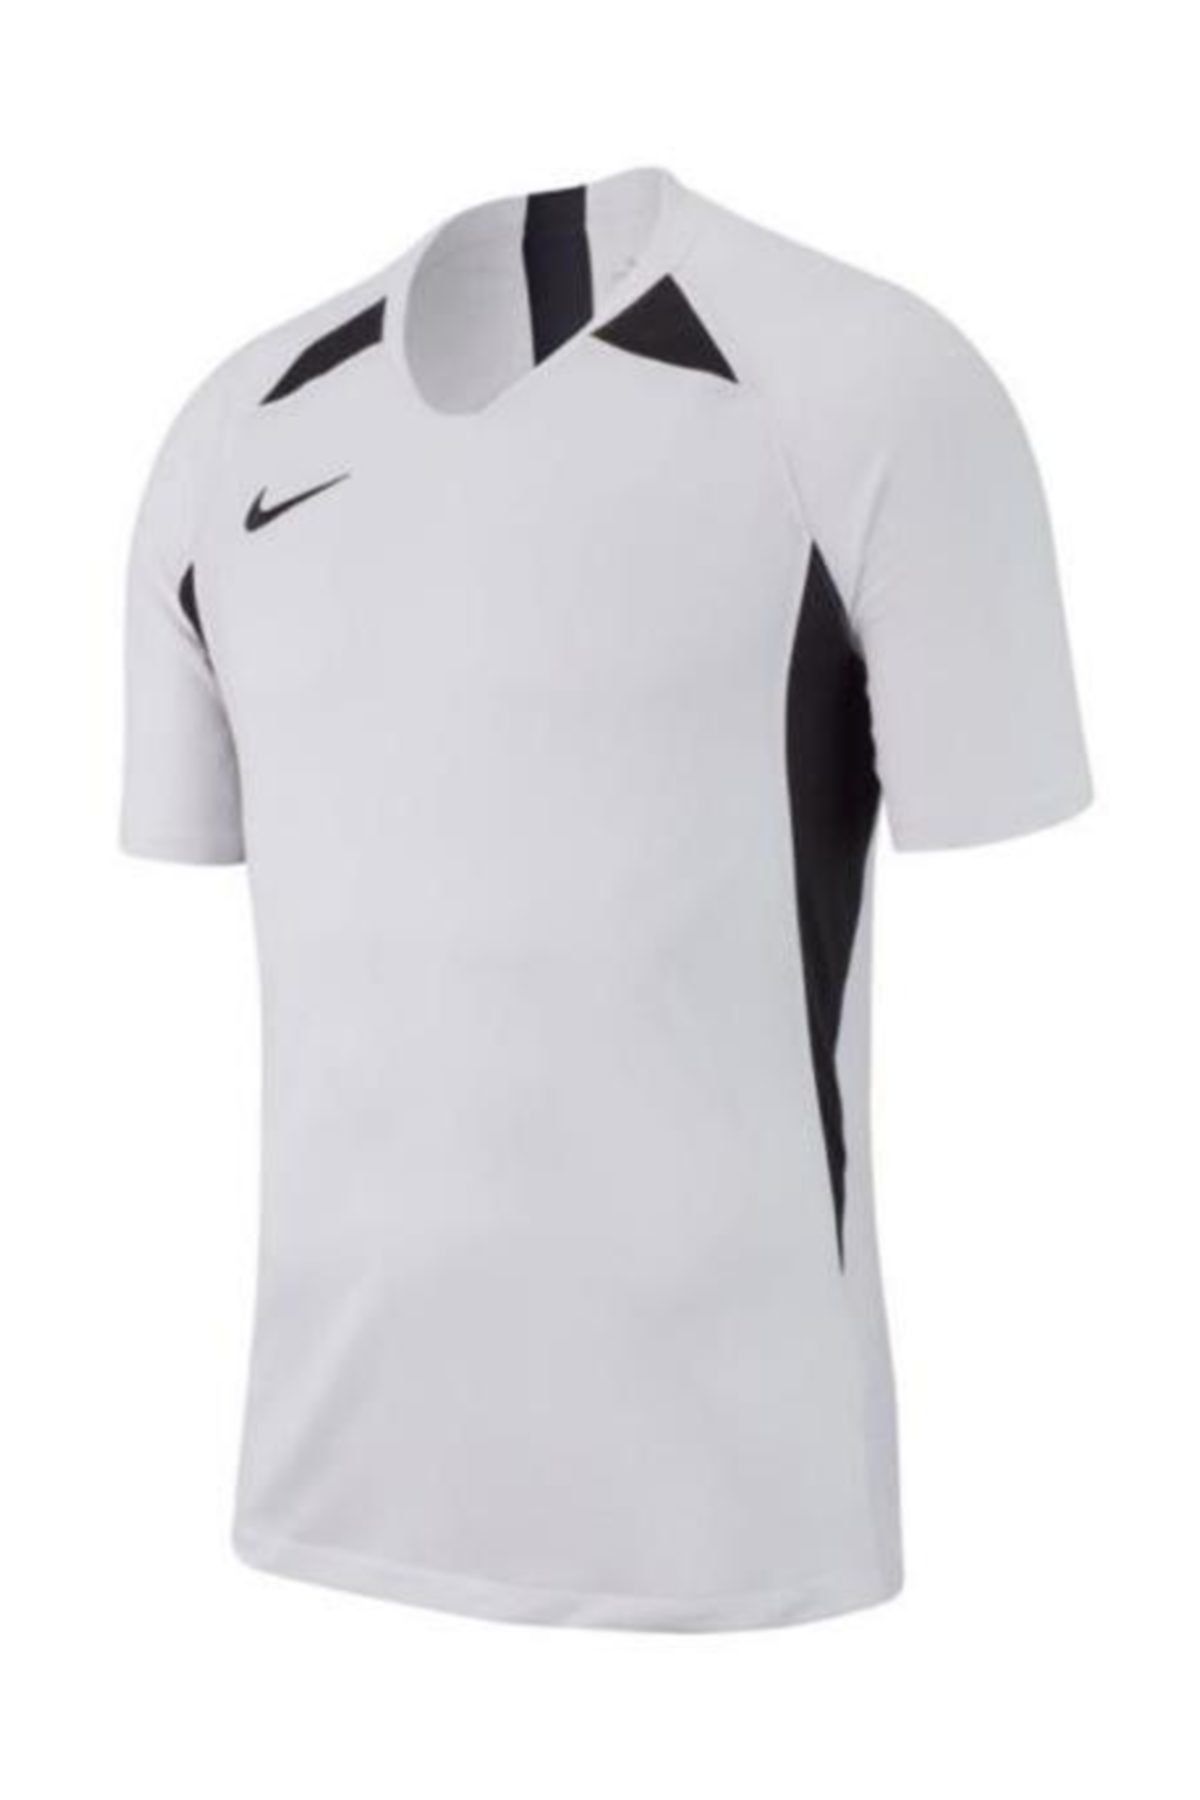 Nike Dri-fıt Striker Legend V Aj0998-100 Erkek Tişört